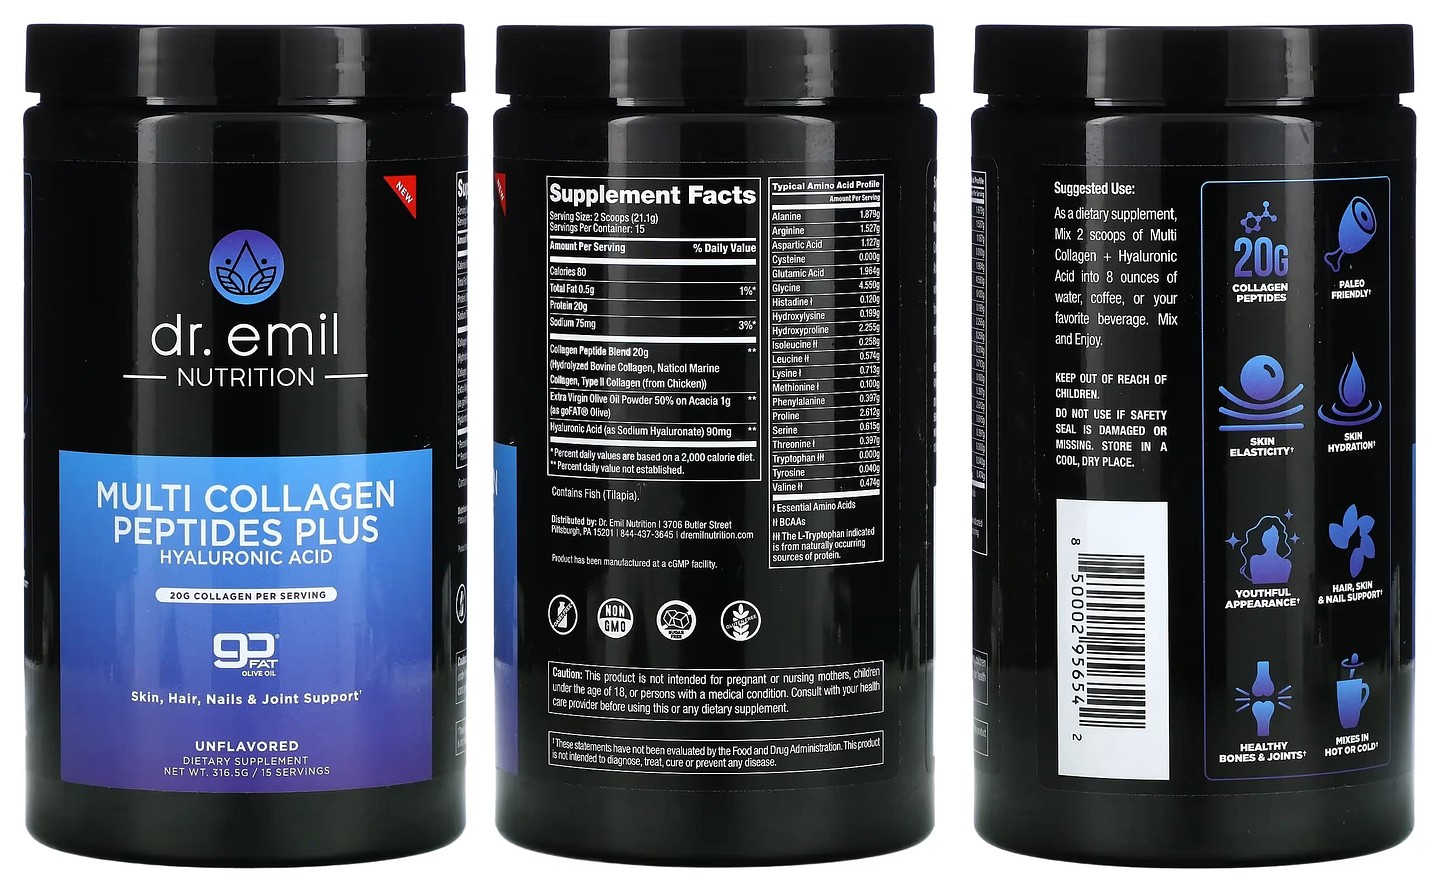 Dr. Emil Nutrition, Multi Collagen Peptides Plus Hyaluronic Acid Powder packaging